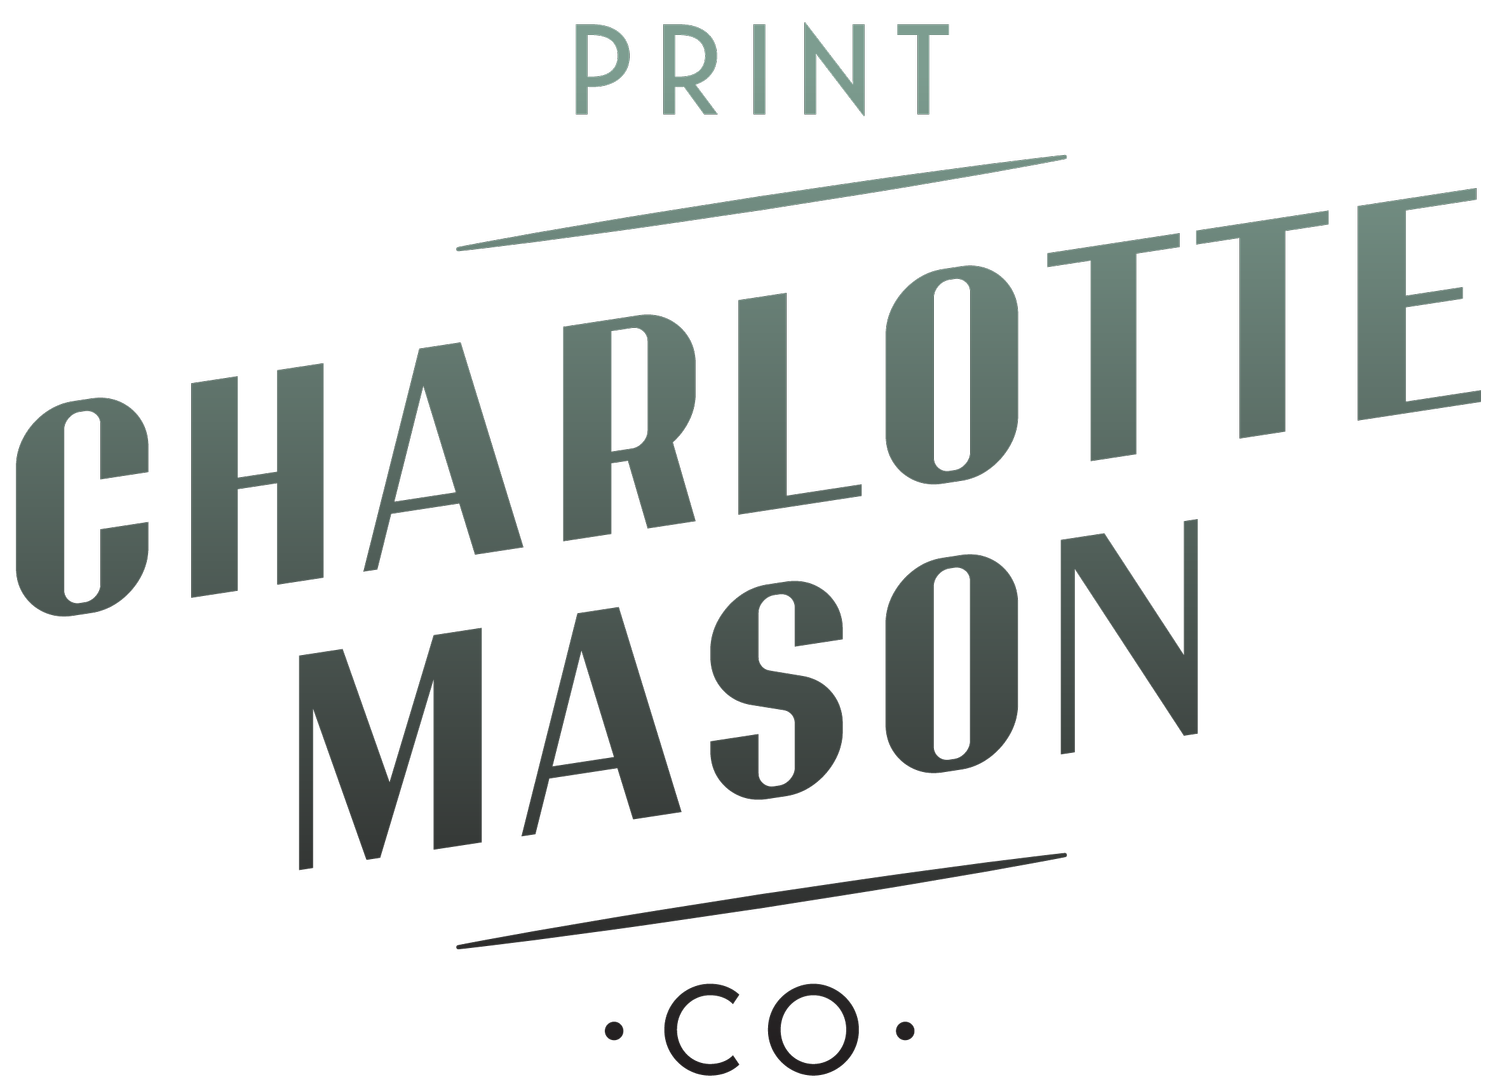 Charlotte Mason Print Co.